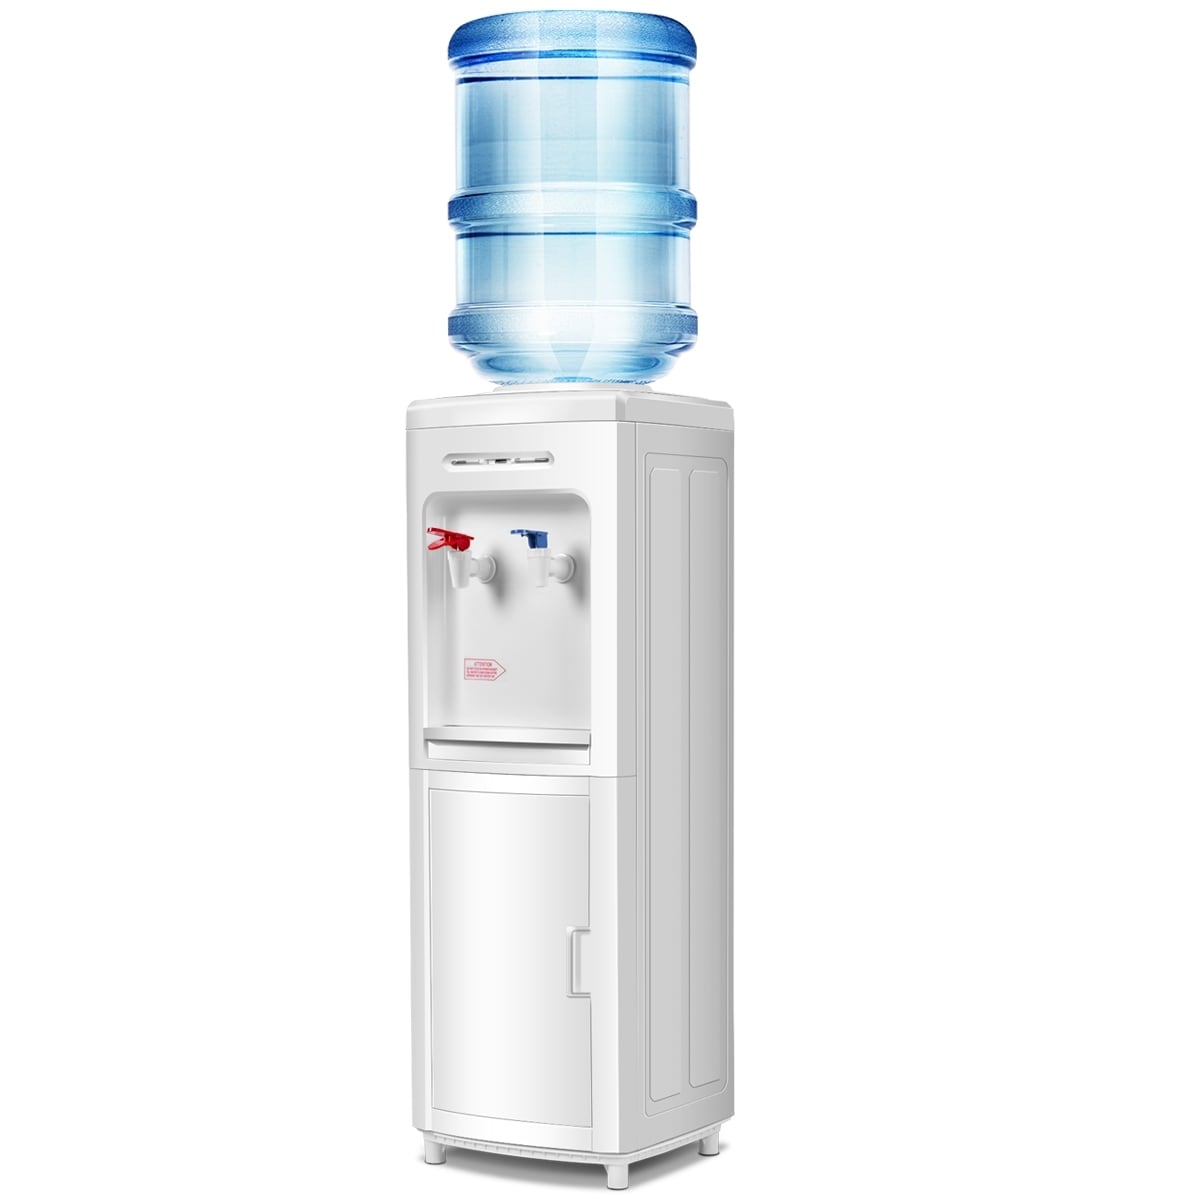 Cold Drink Dispenser (5 gallon capacity)